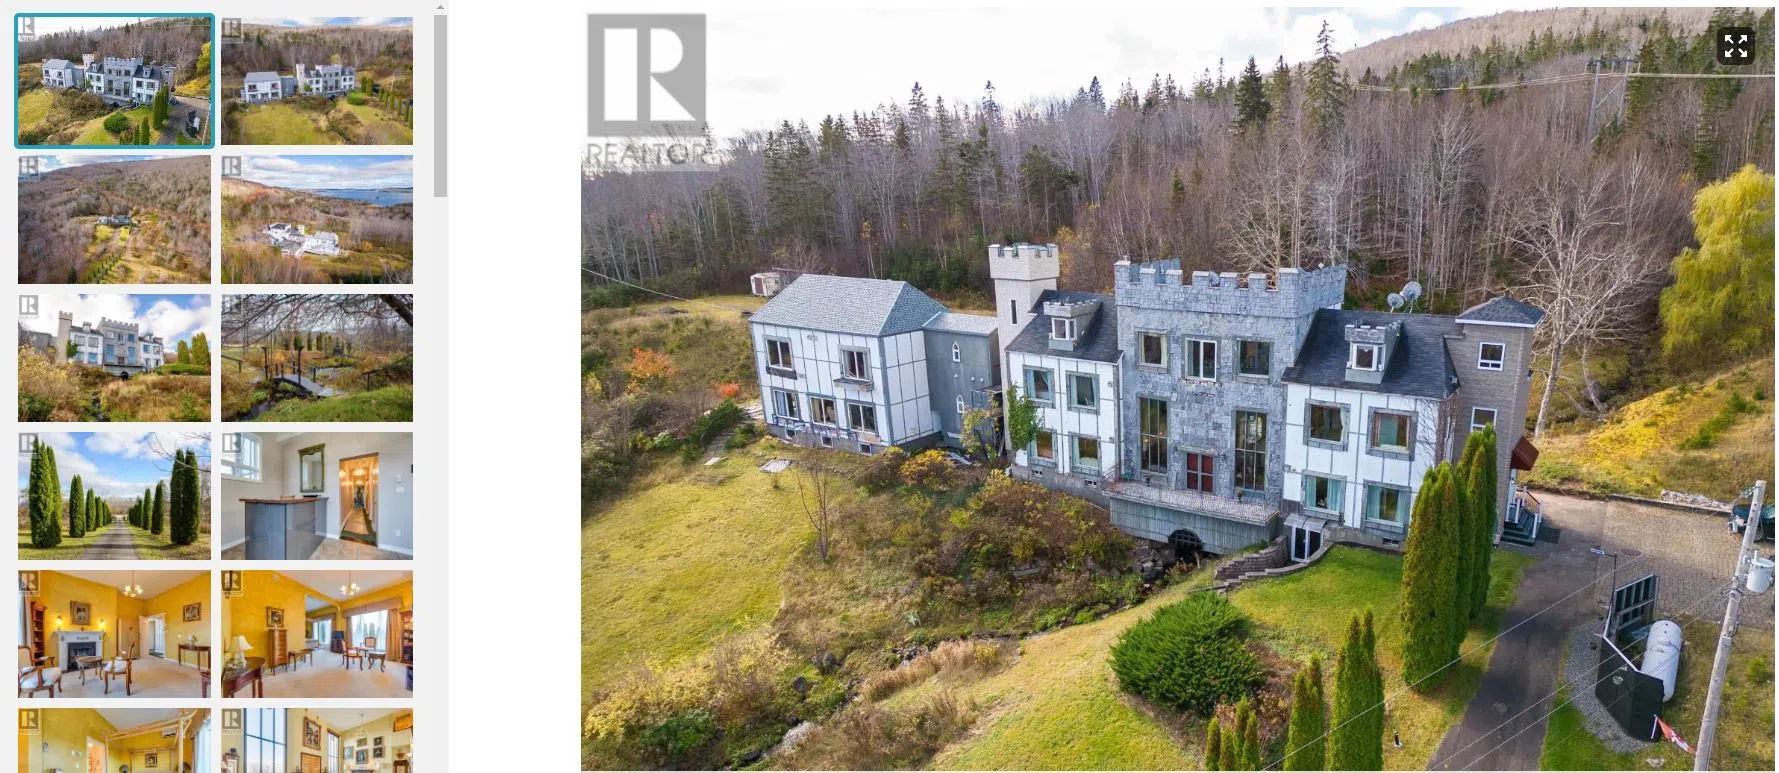 Cape Breton castle listed for 1 million dollars has sold